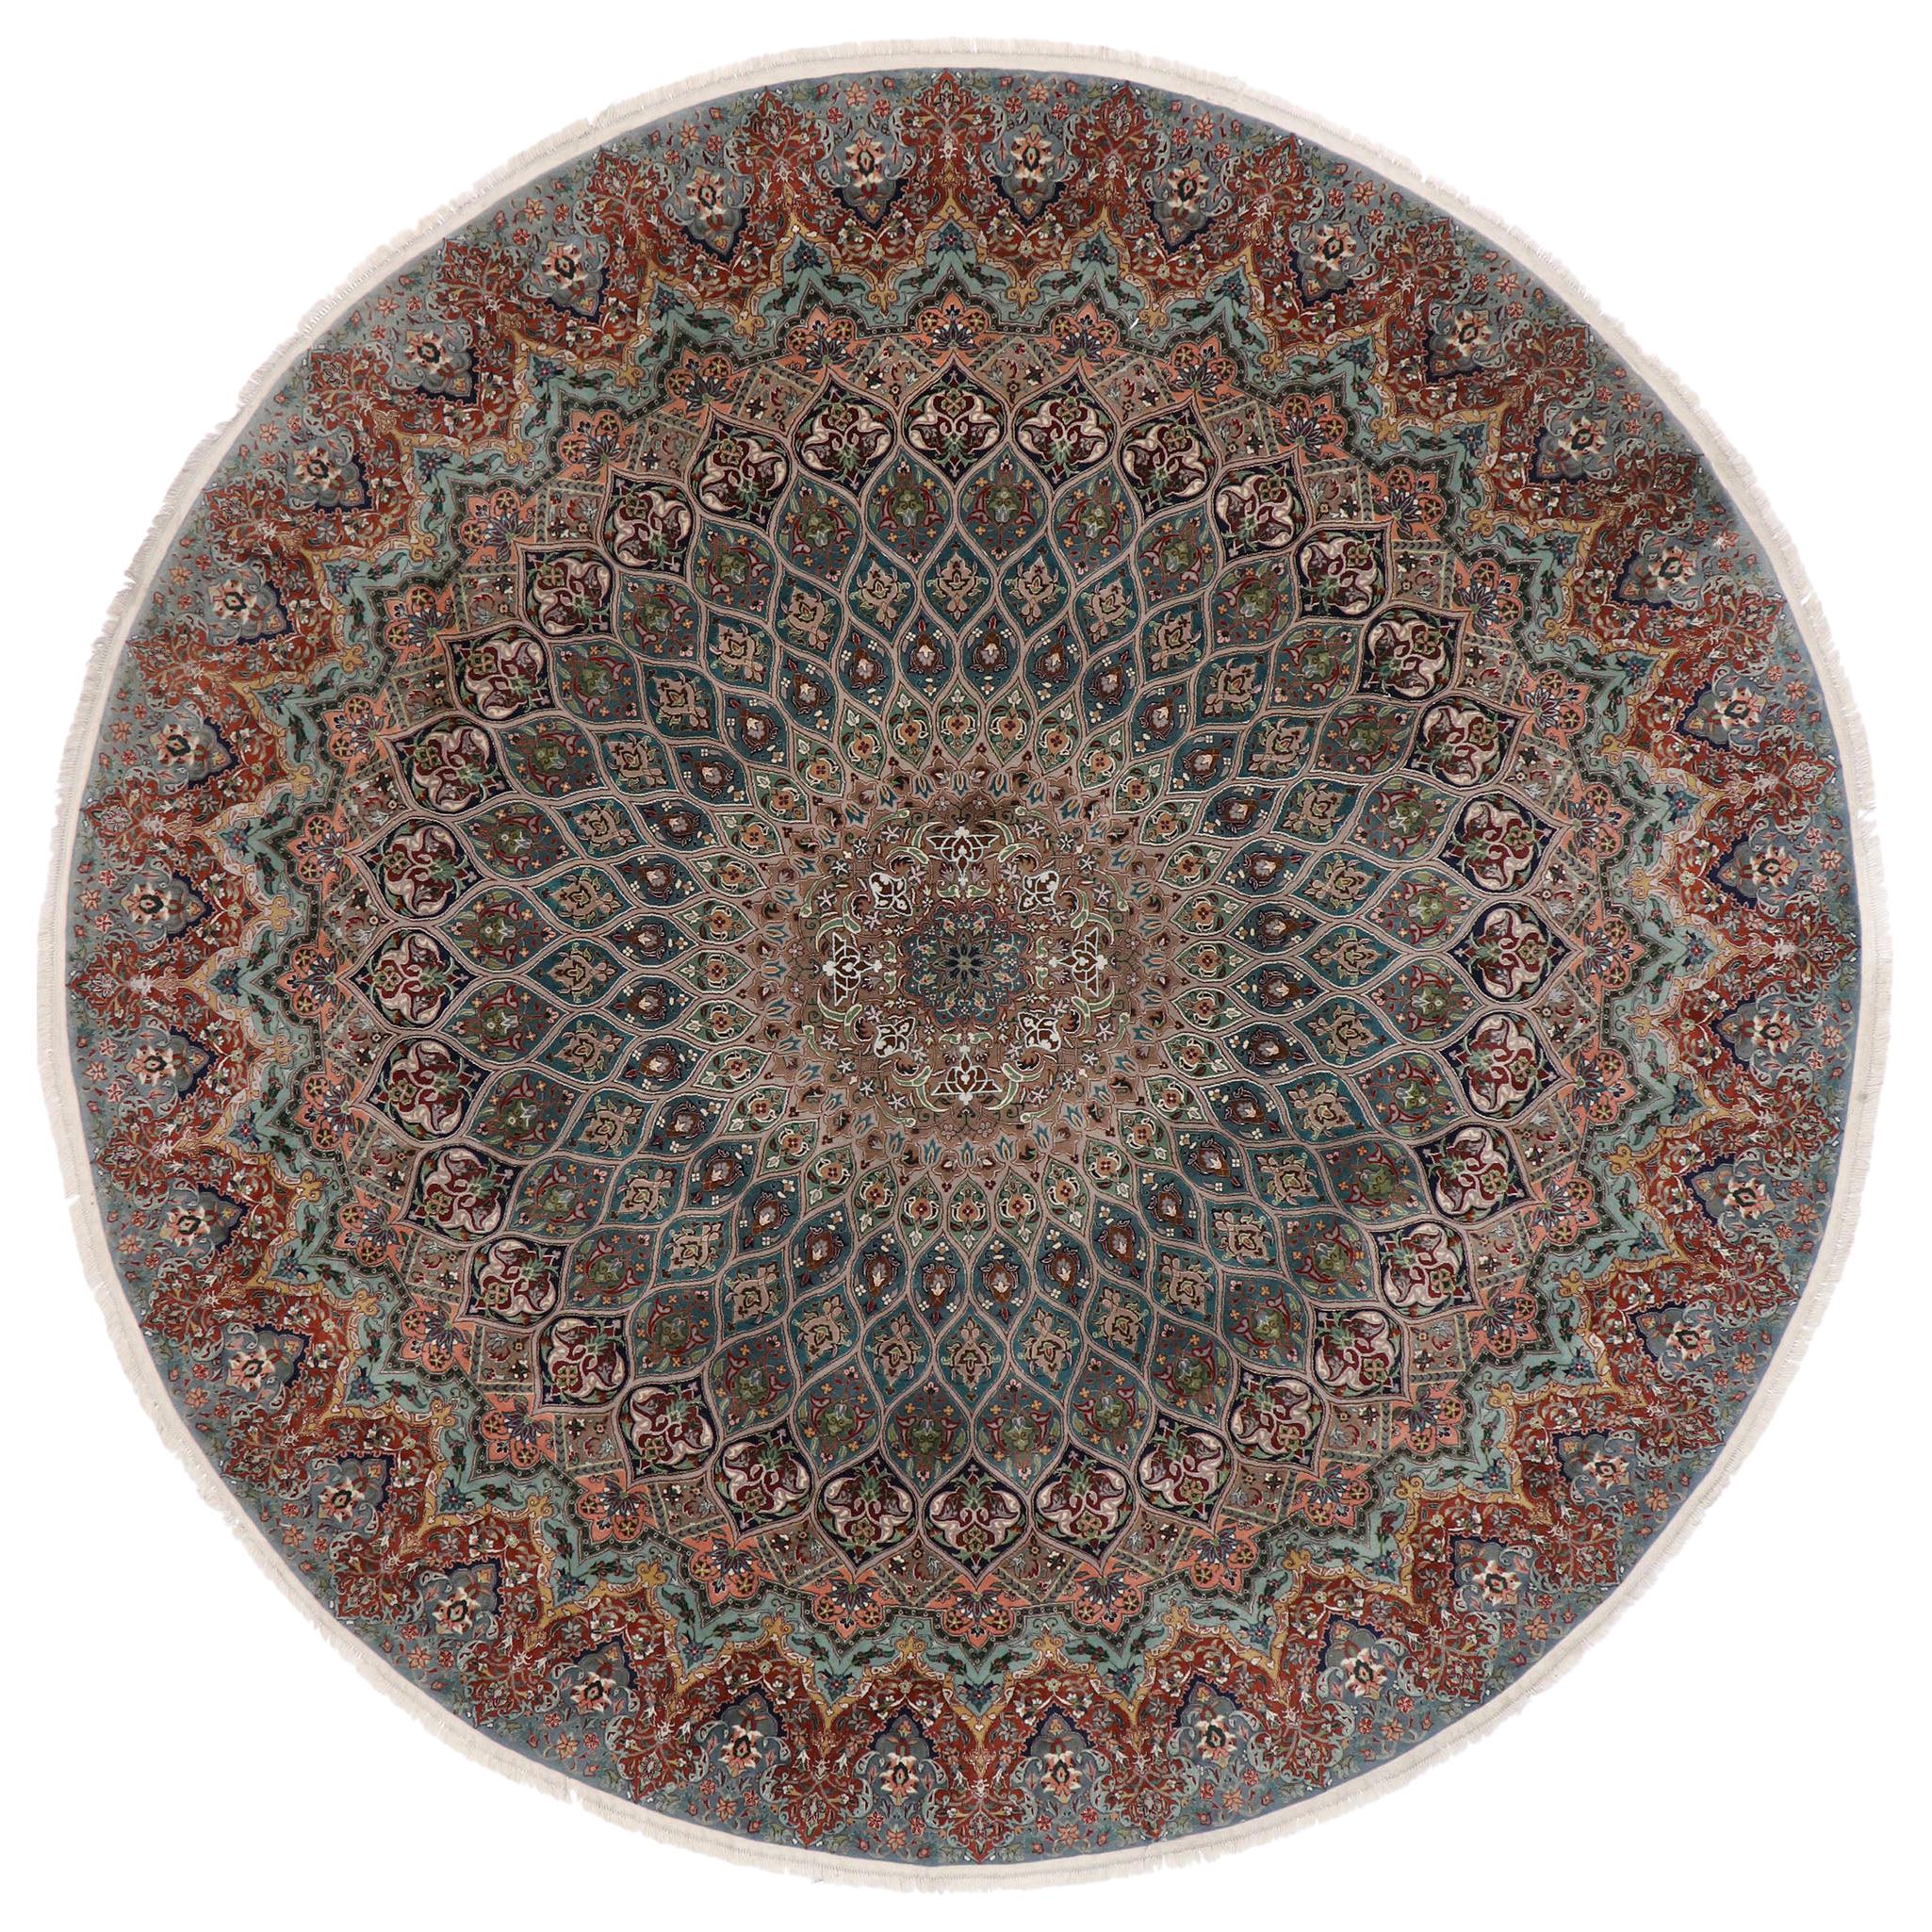 Vintage Persian Tabriz Round Mandala Rug with Art Nouveau Rococo Style